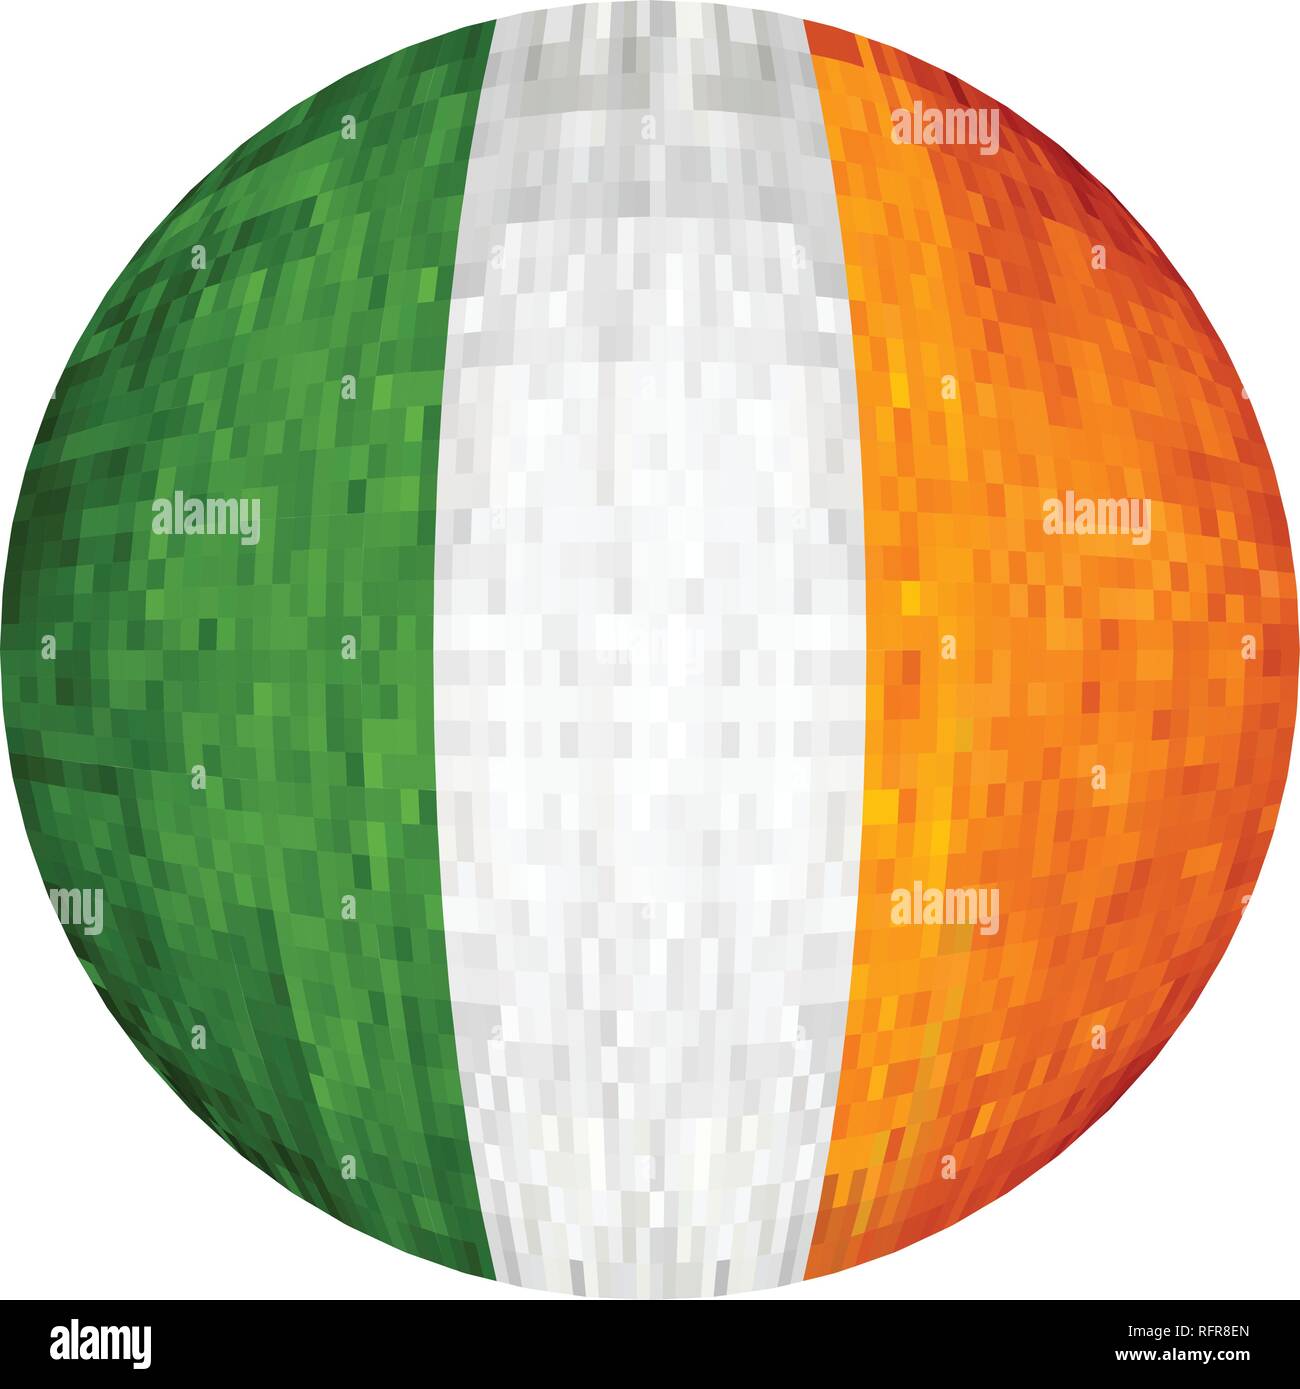 Ball with Ireland flag - Illustration,  Sphere Ireland Flag vector Stock Vector